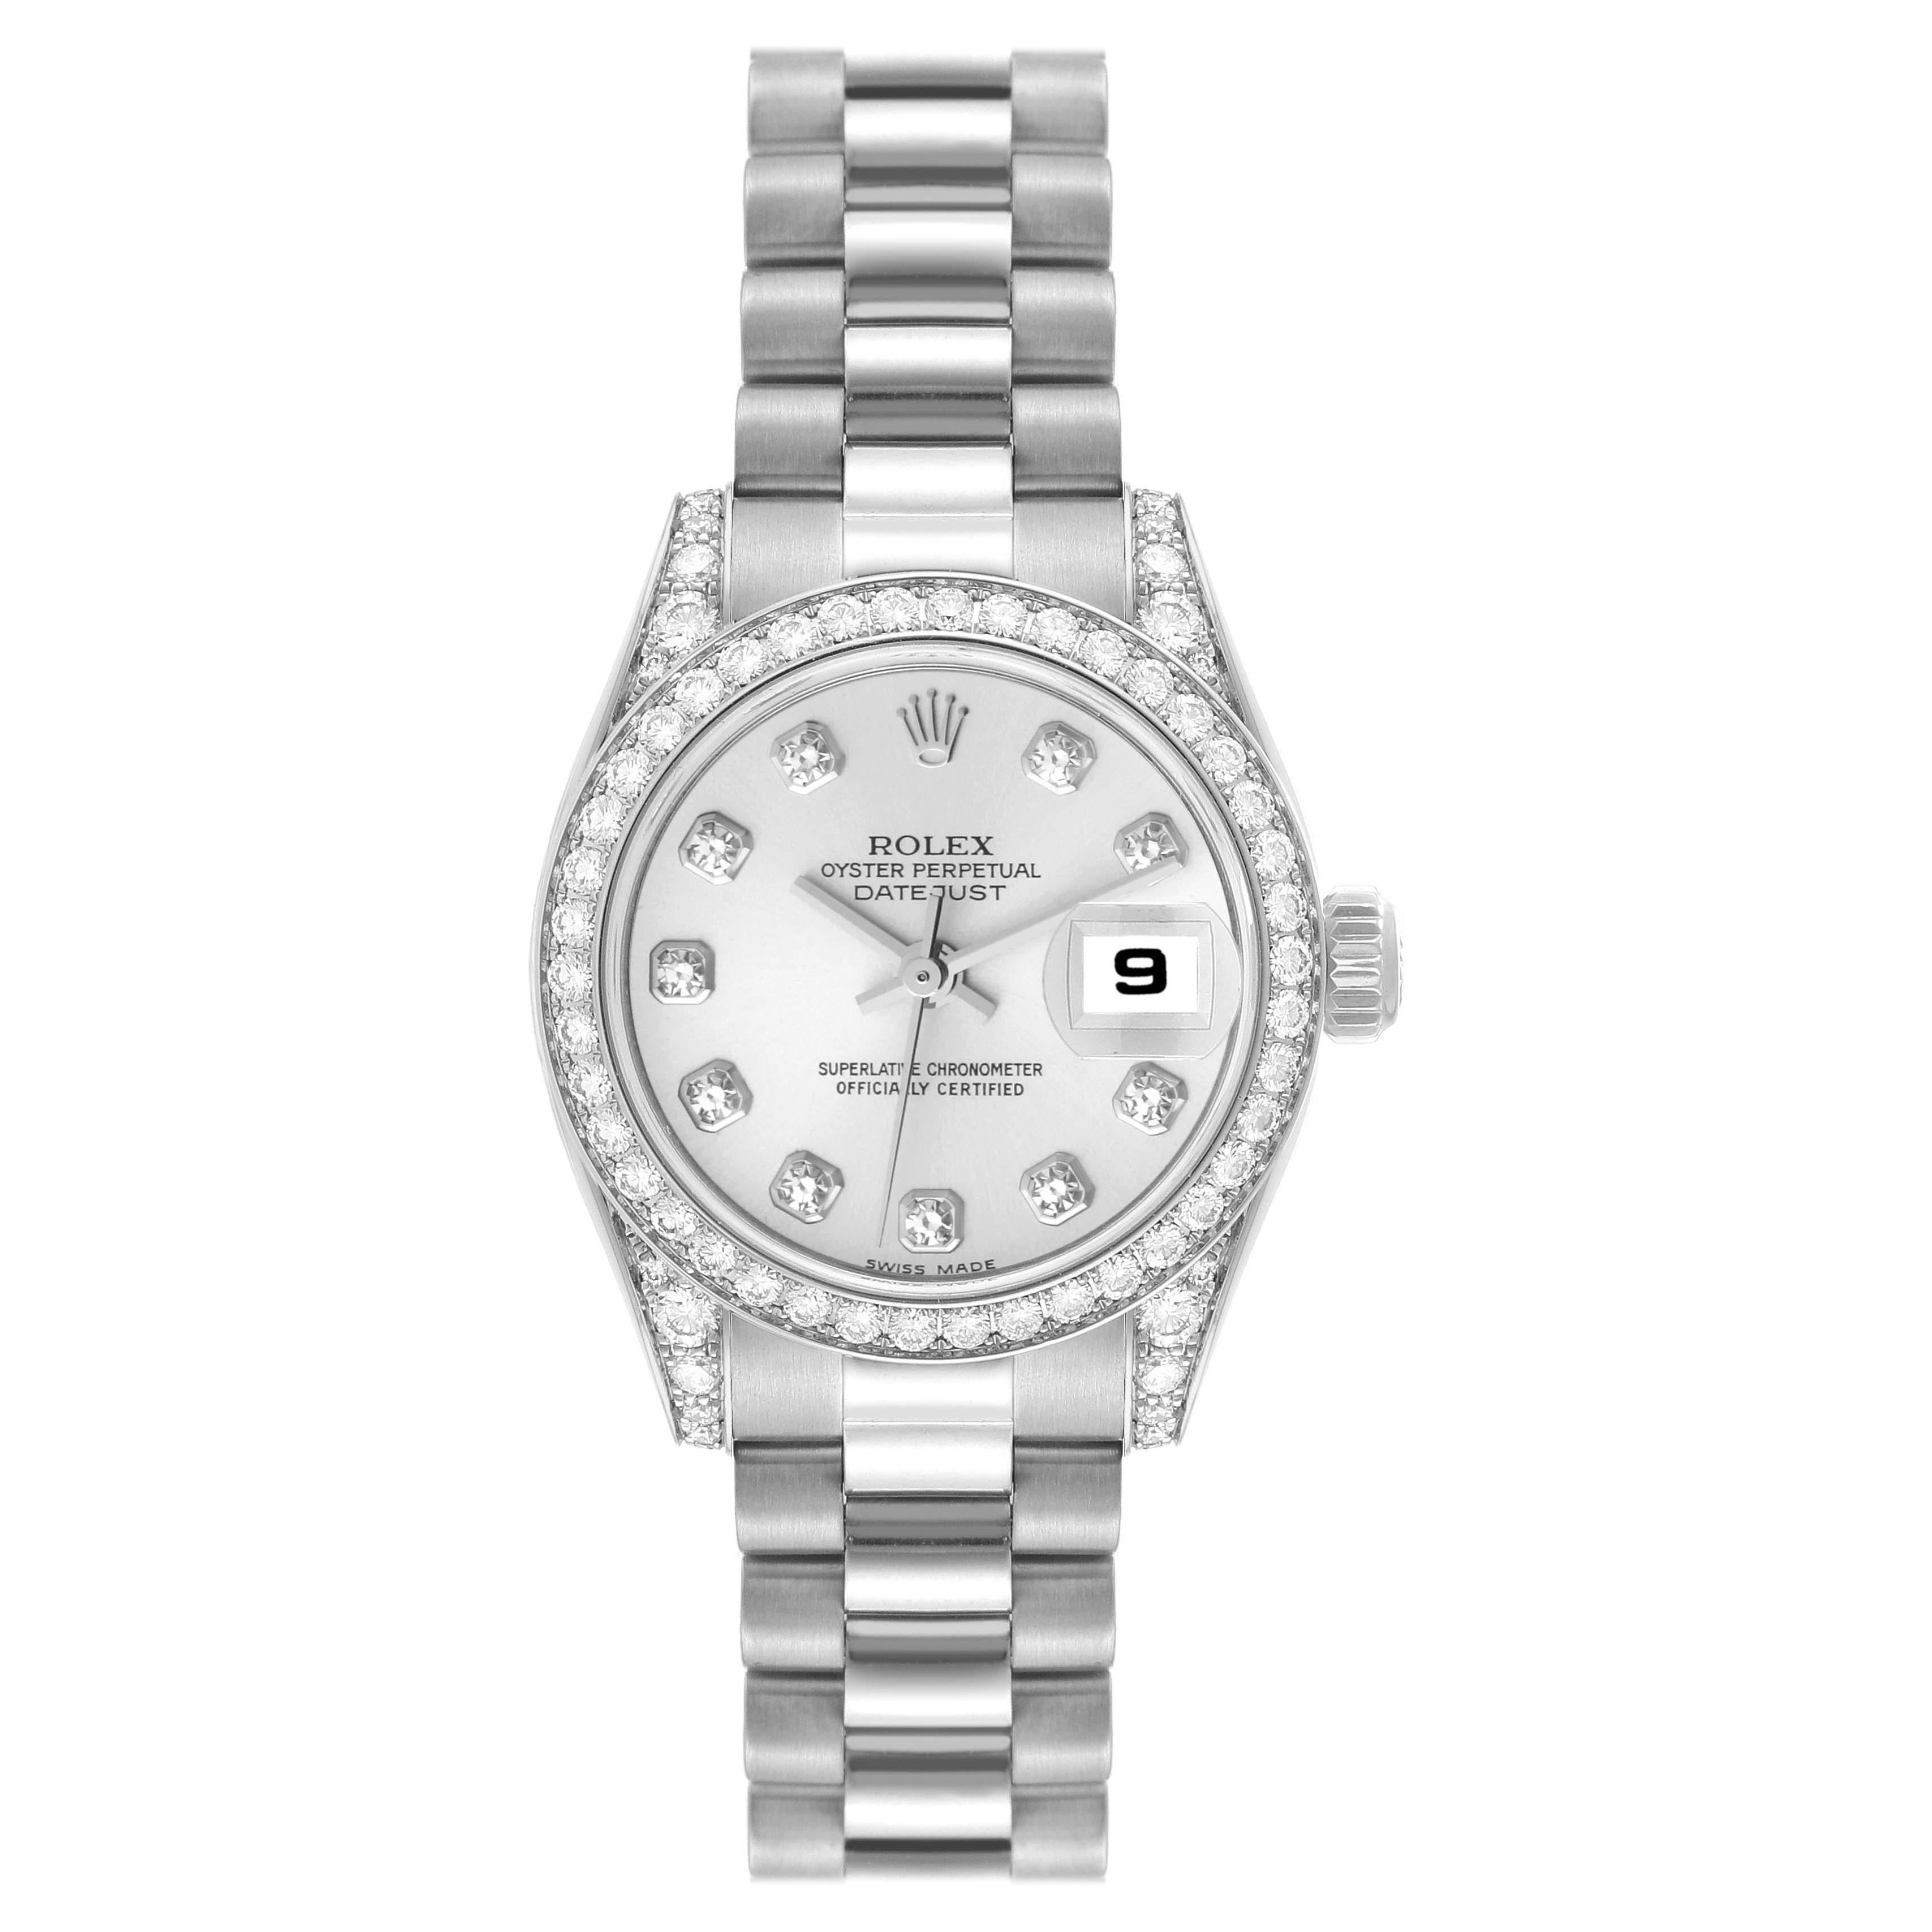 Rolex Datejust President White Gold Diamond Bezel Ladies Watch 179159 Box Papers